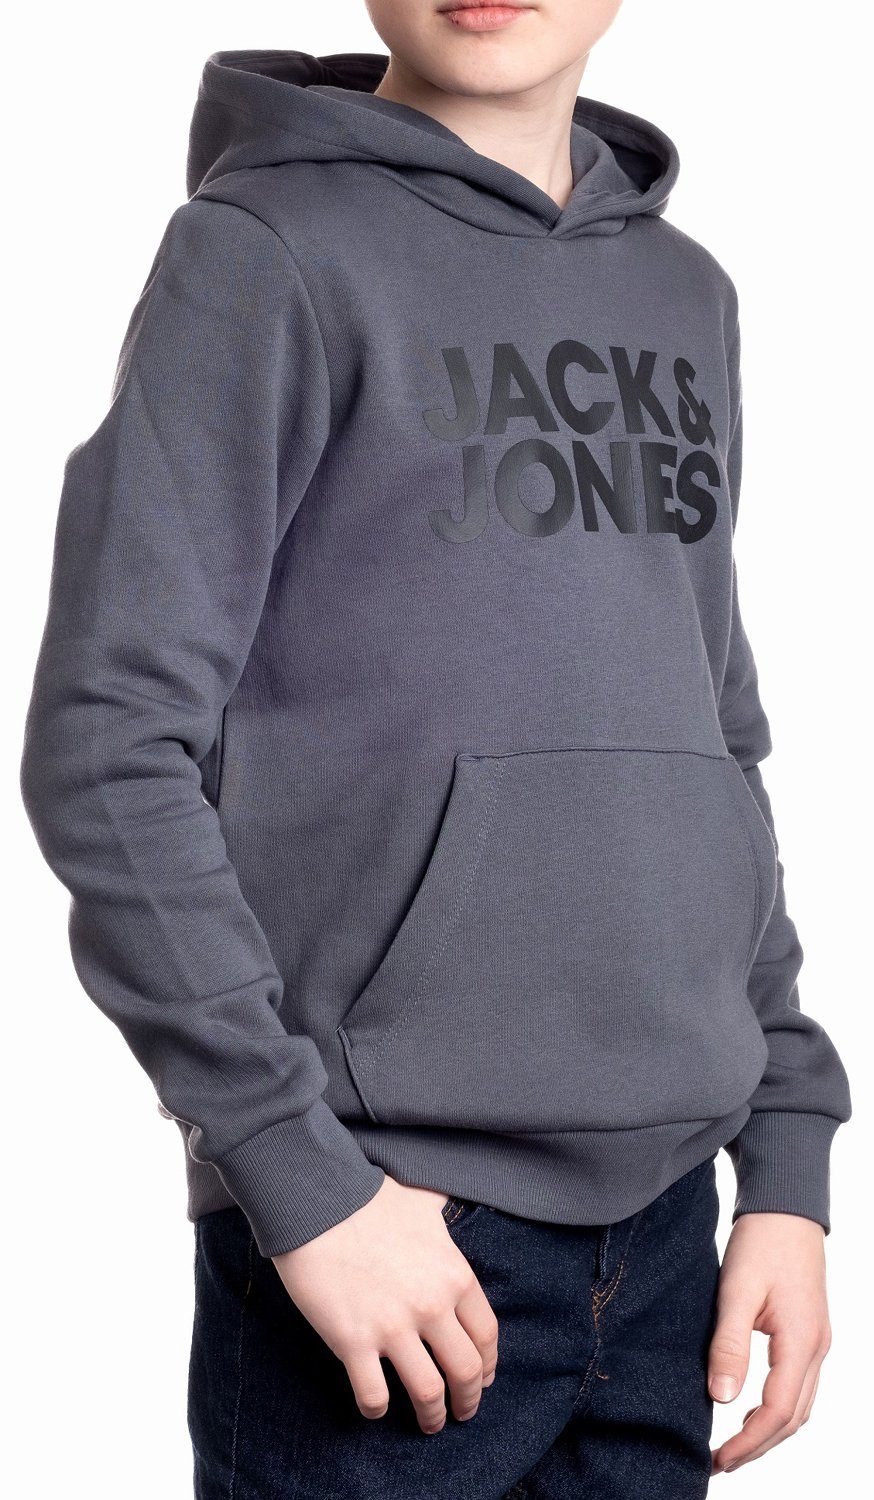 Pullover Junior Jones & Doppelpack) Mix (Spar mit Jack Doppelpack Printaufdruck 18 Kapuzenpullover Set,